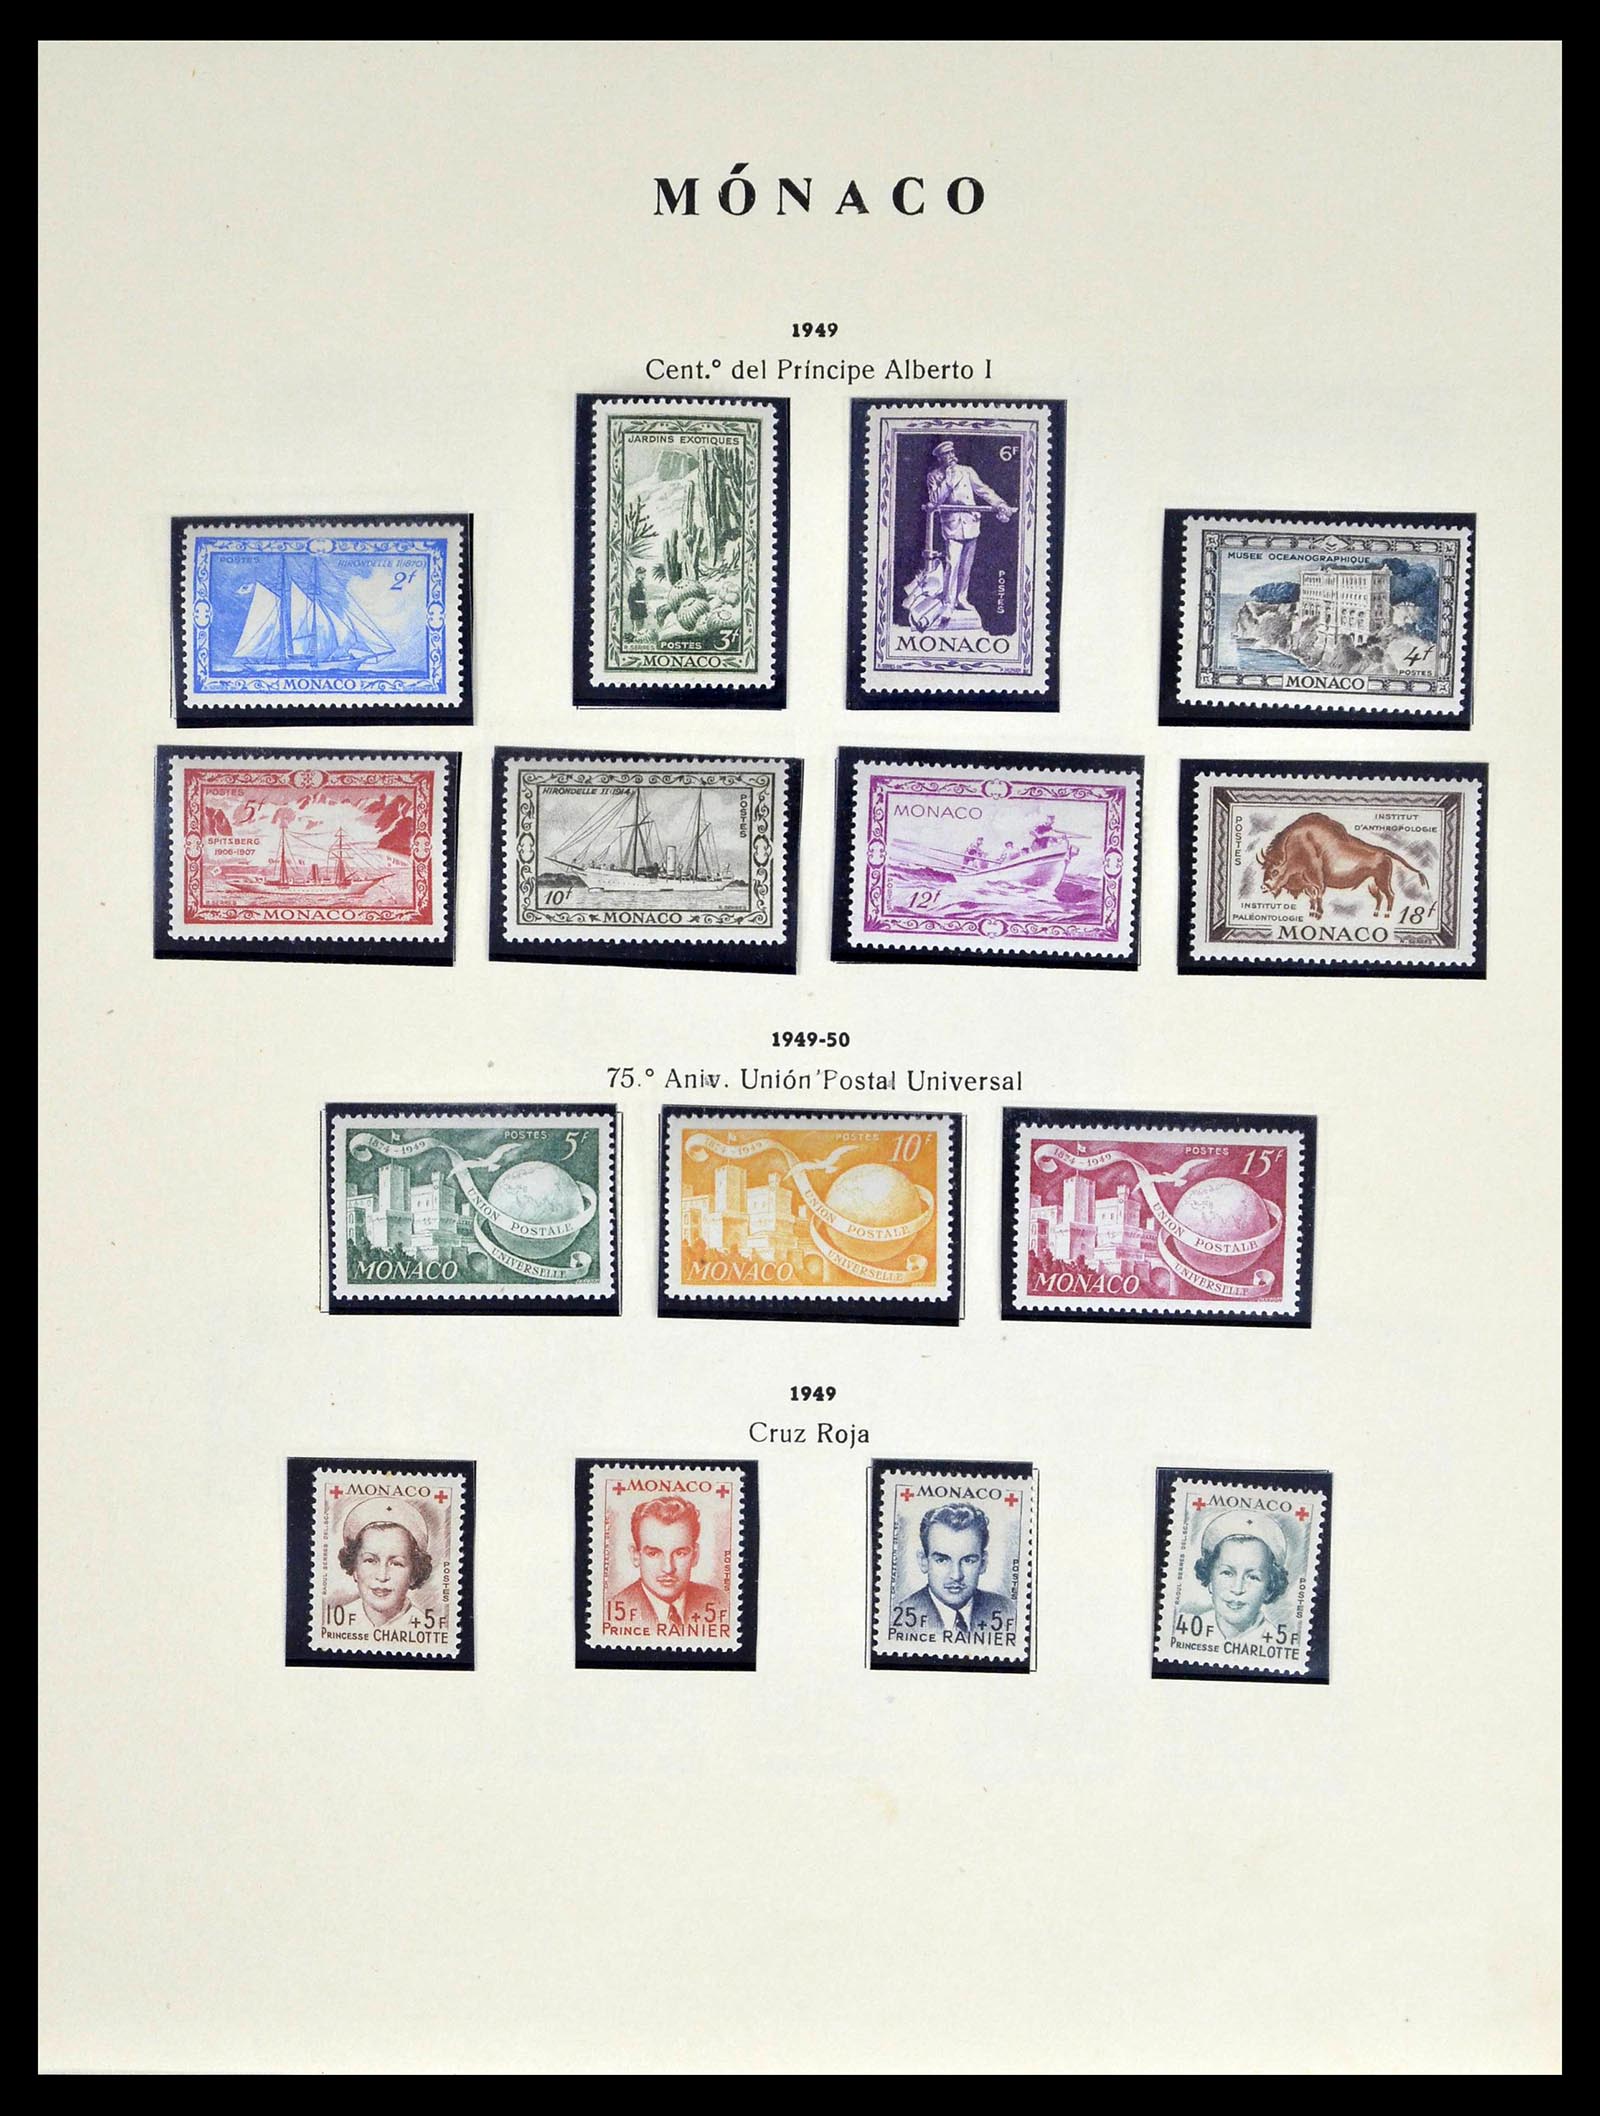 39082 0020 - Stamp collection 39082 Monaco 1885-1964.